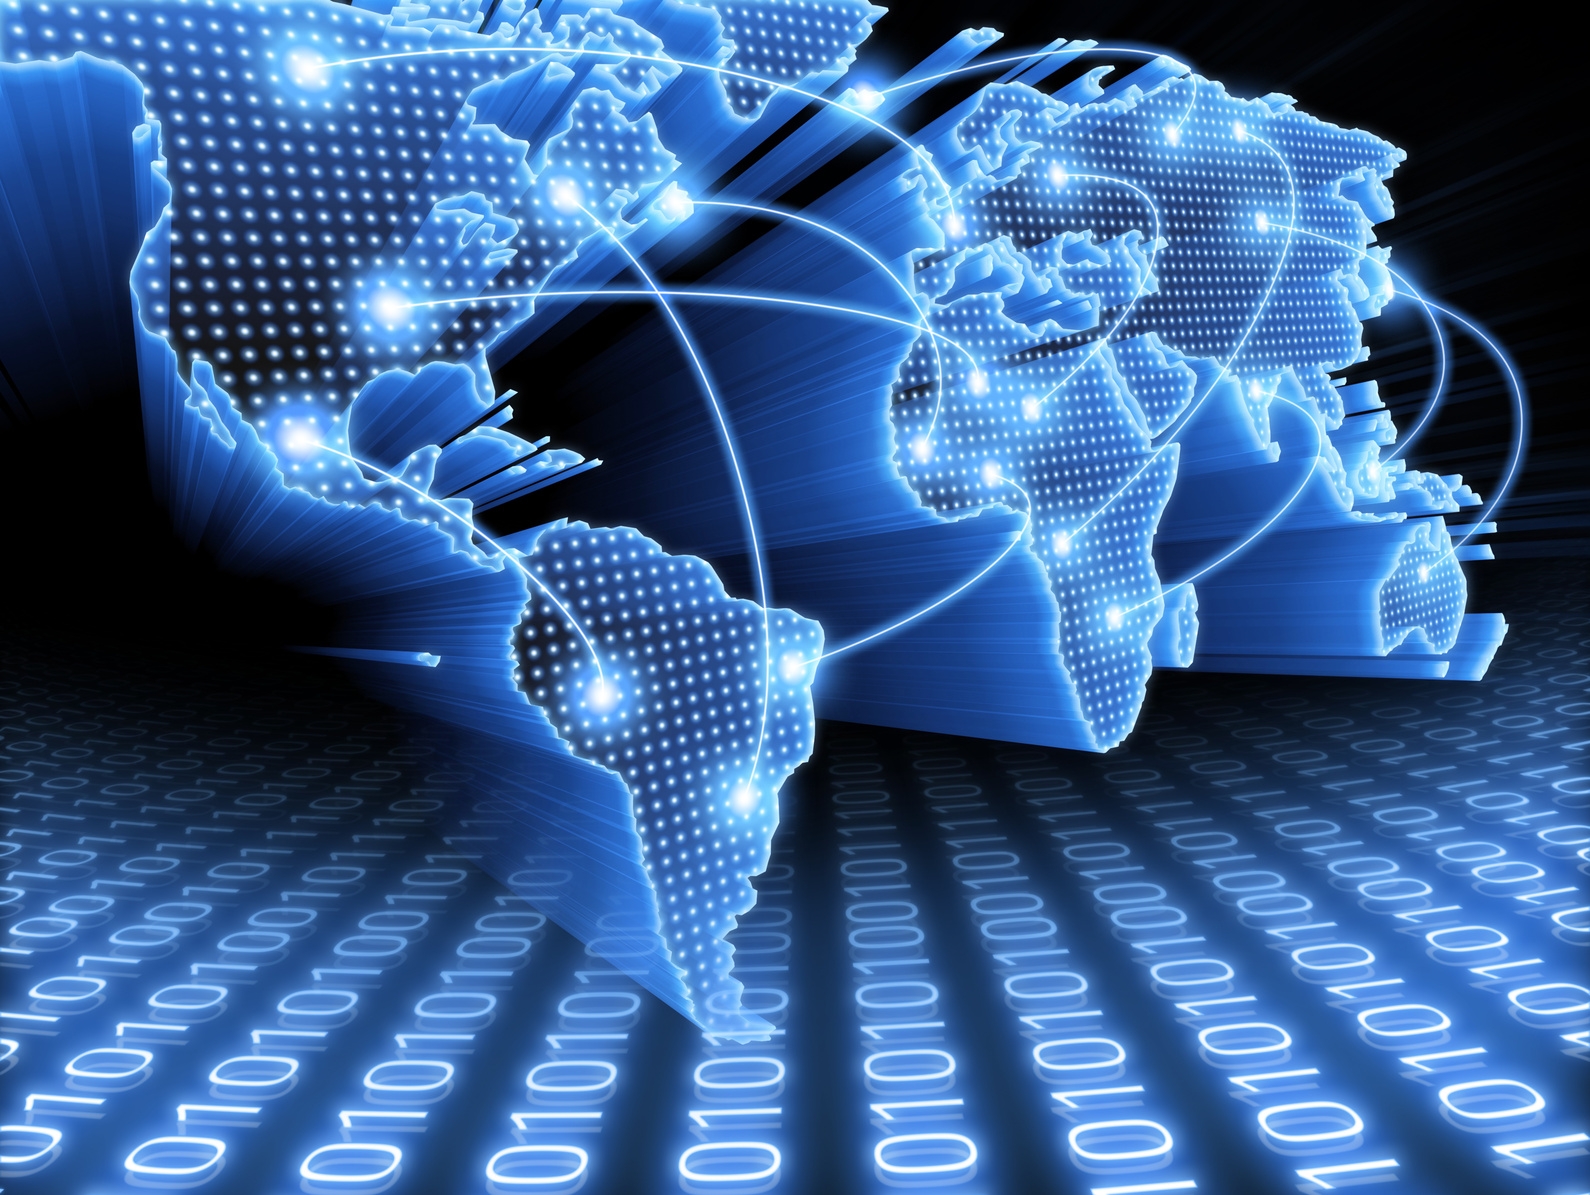 ITU talks could affect freedom of internet